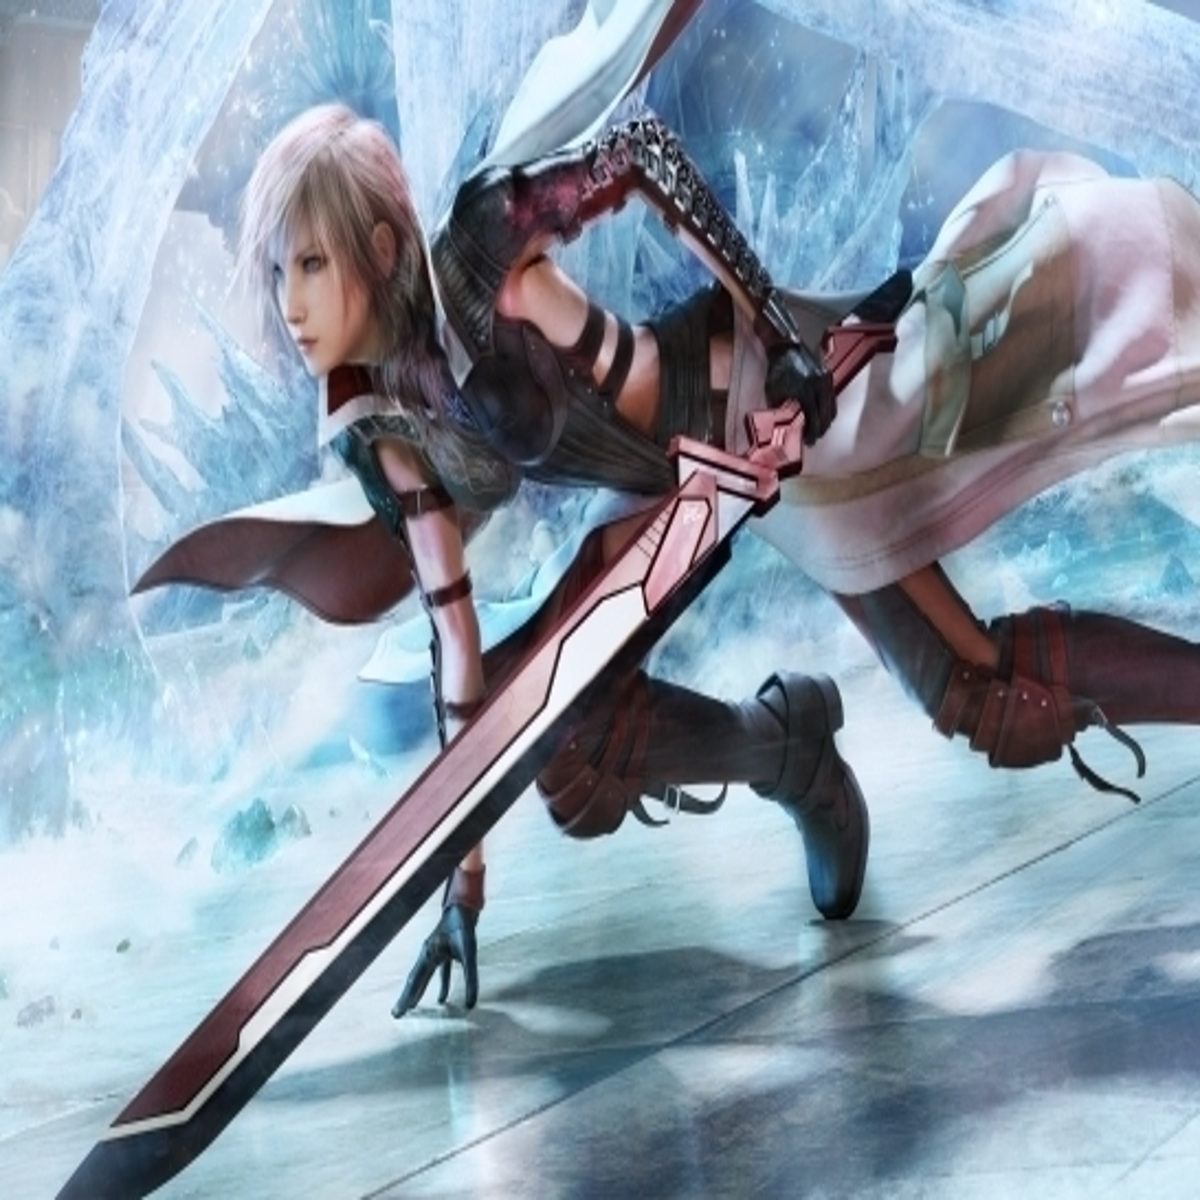 Final Fantasy's Lightning Is Perfect Avatar for Heroic Women